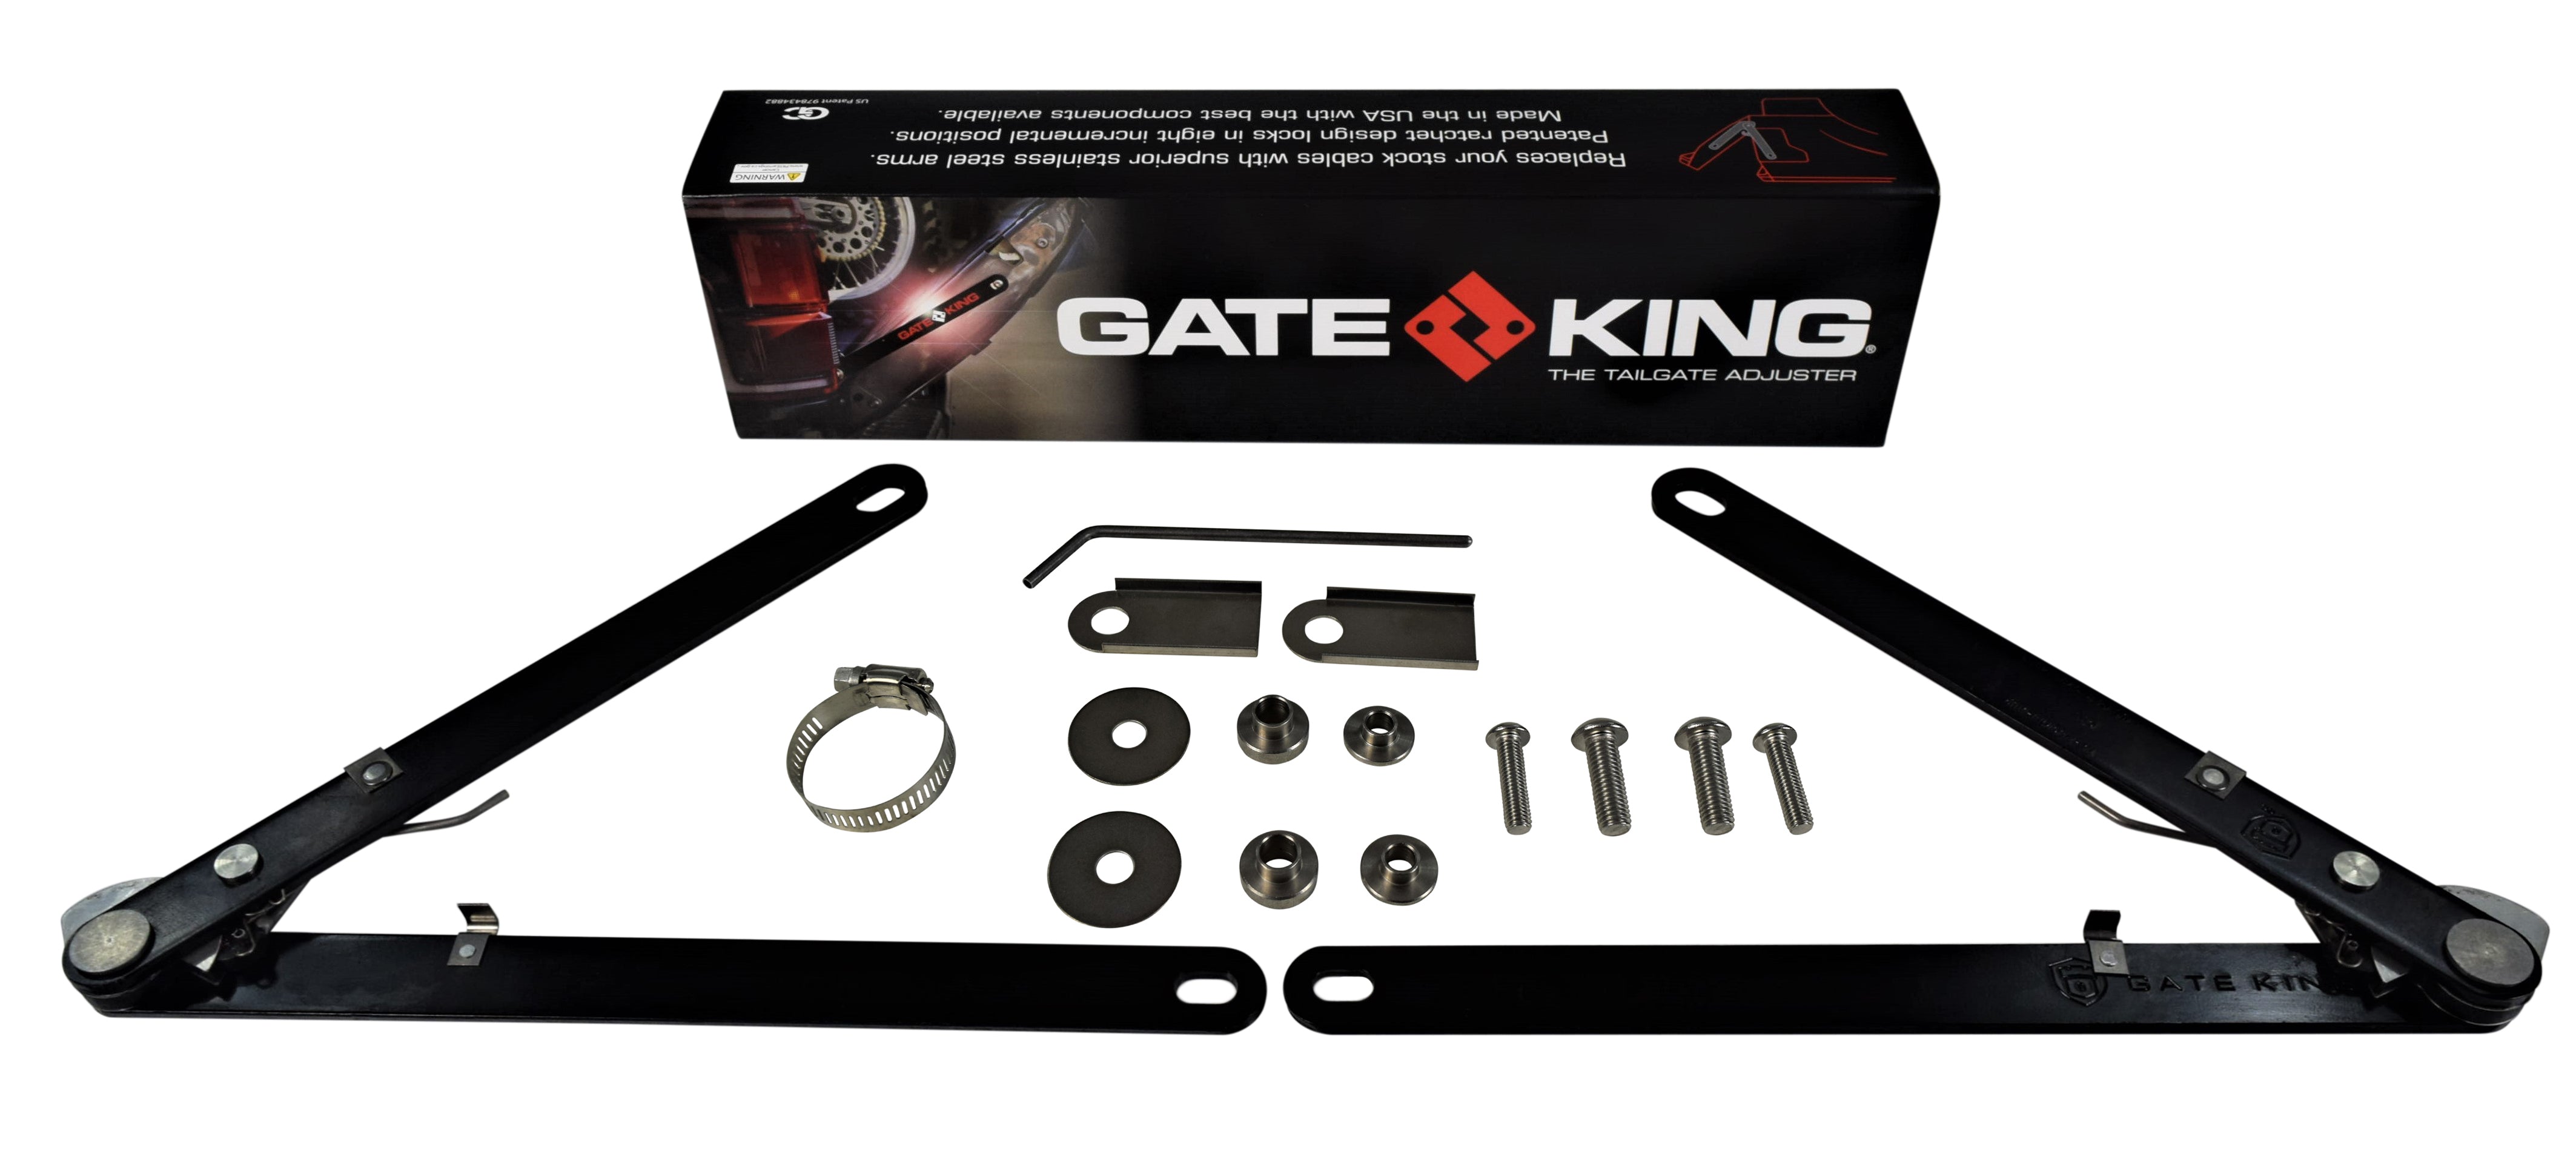 Gate-King-Tailgate-Adjuster-for-Silverado-Sierra-1500-2500-3500-2007-2018-image-1